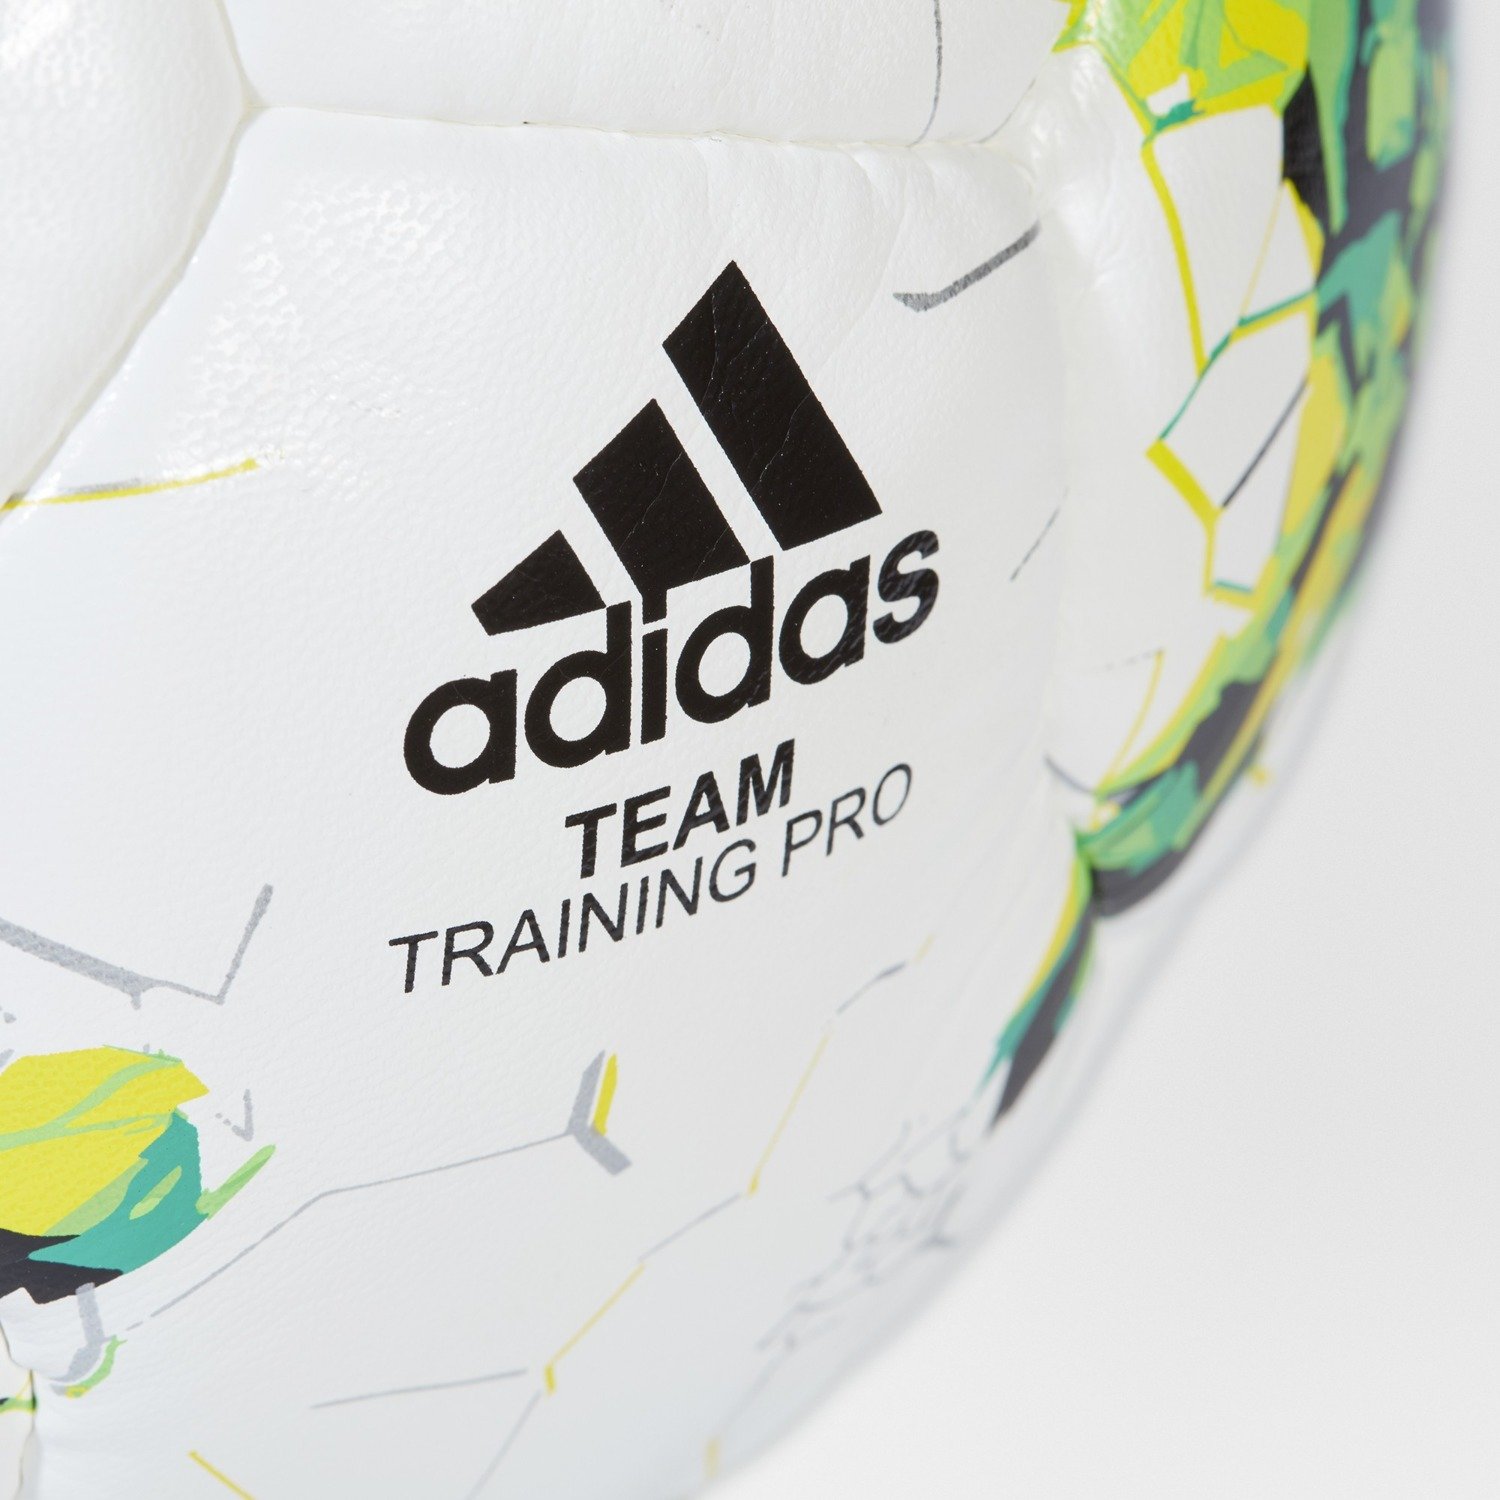 Football Adidas team Trening Pro 5 CE4219 - Footballs Team Sports Football  - sporti-shop.com